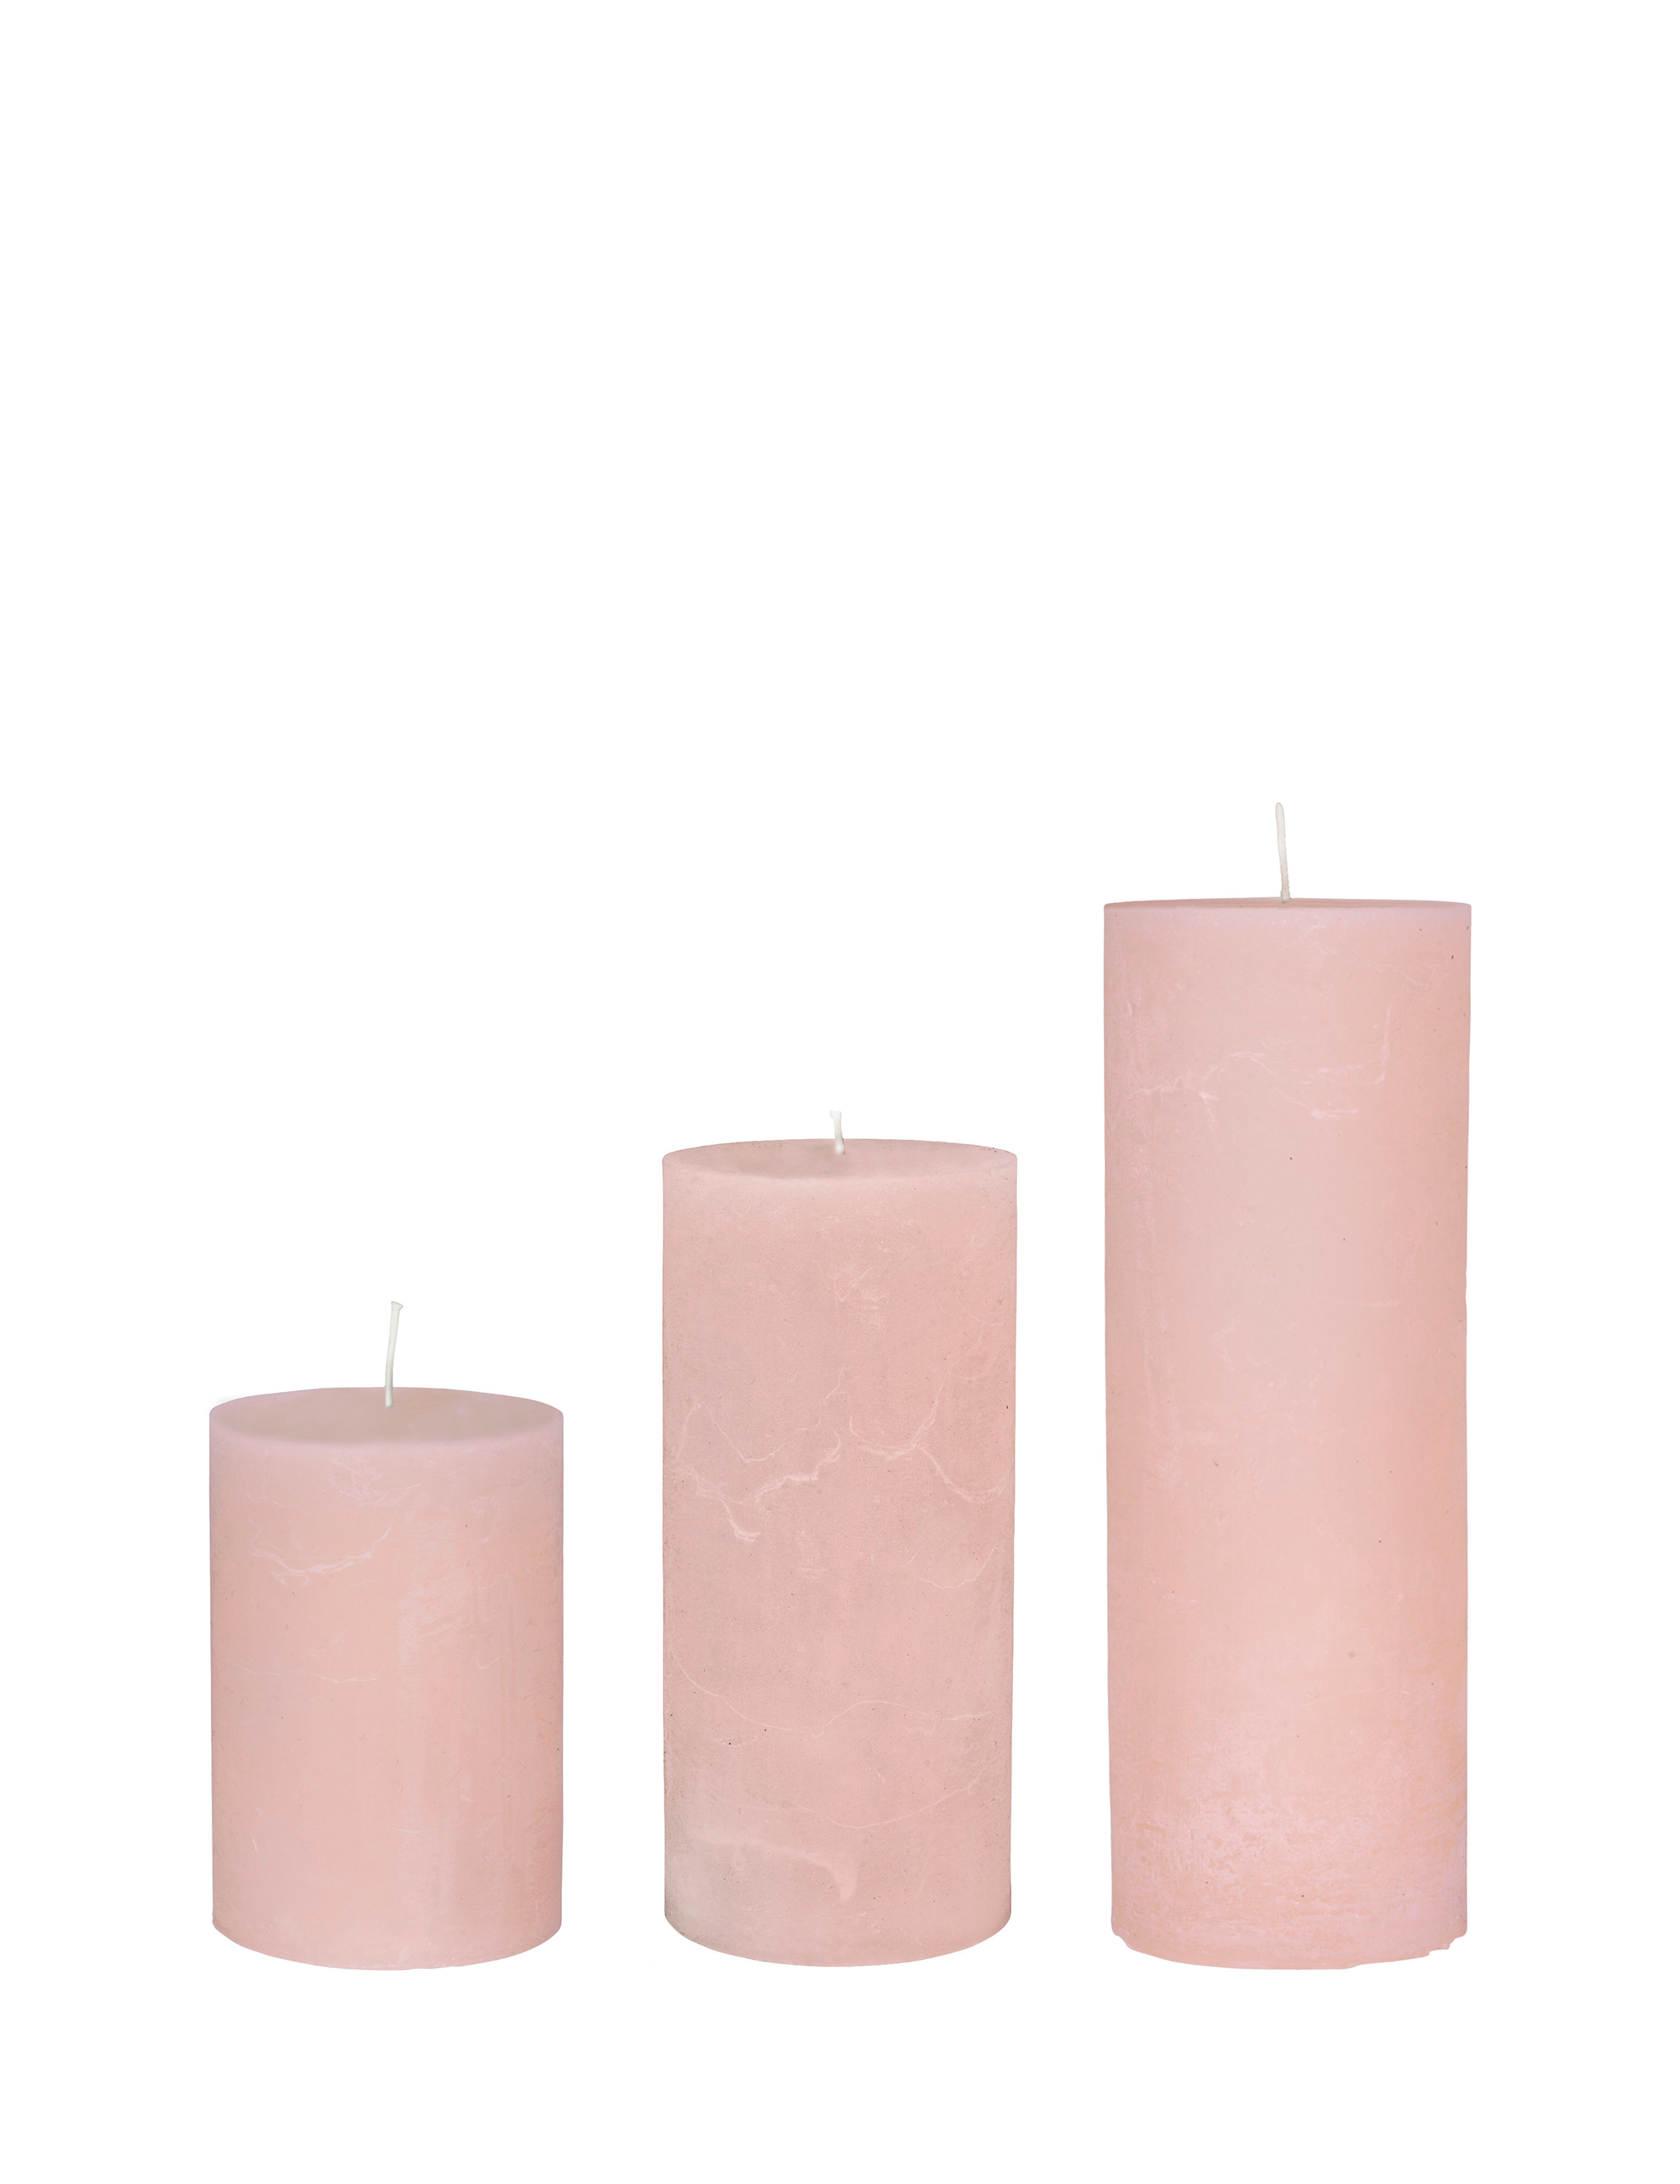 Rustic candle bloklys, diameter 7 cm - ROSE • Cozy living